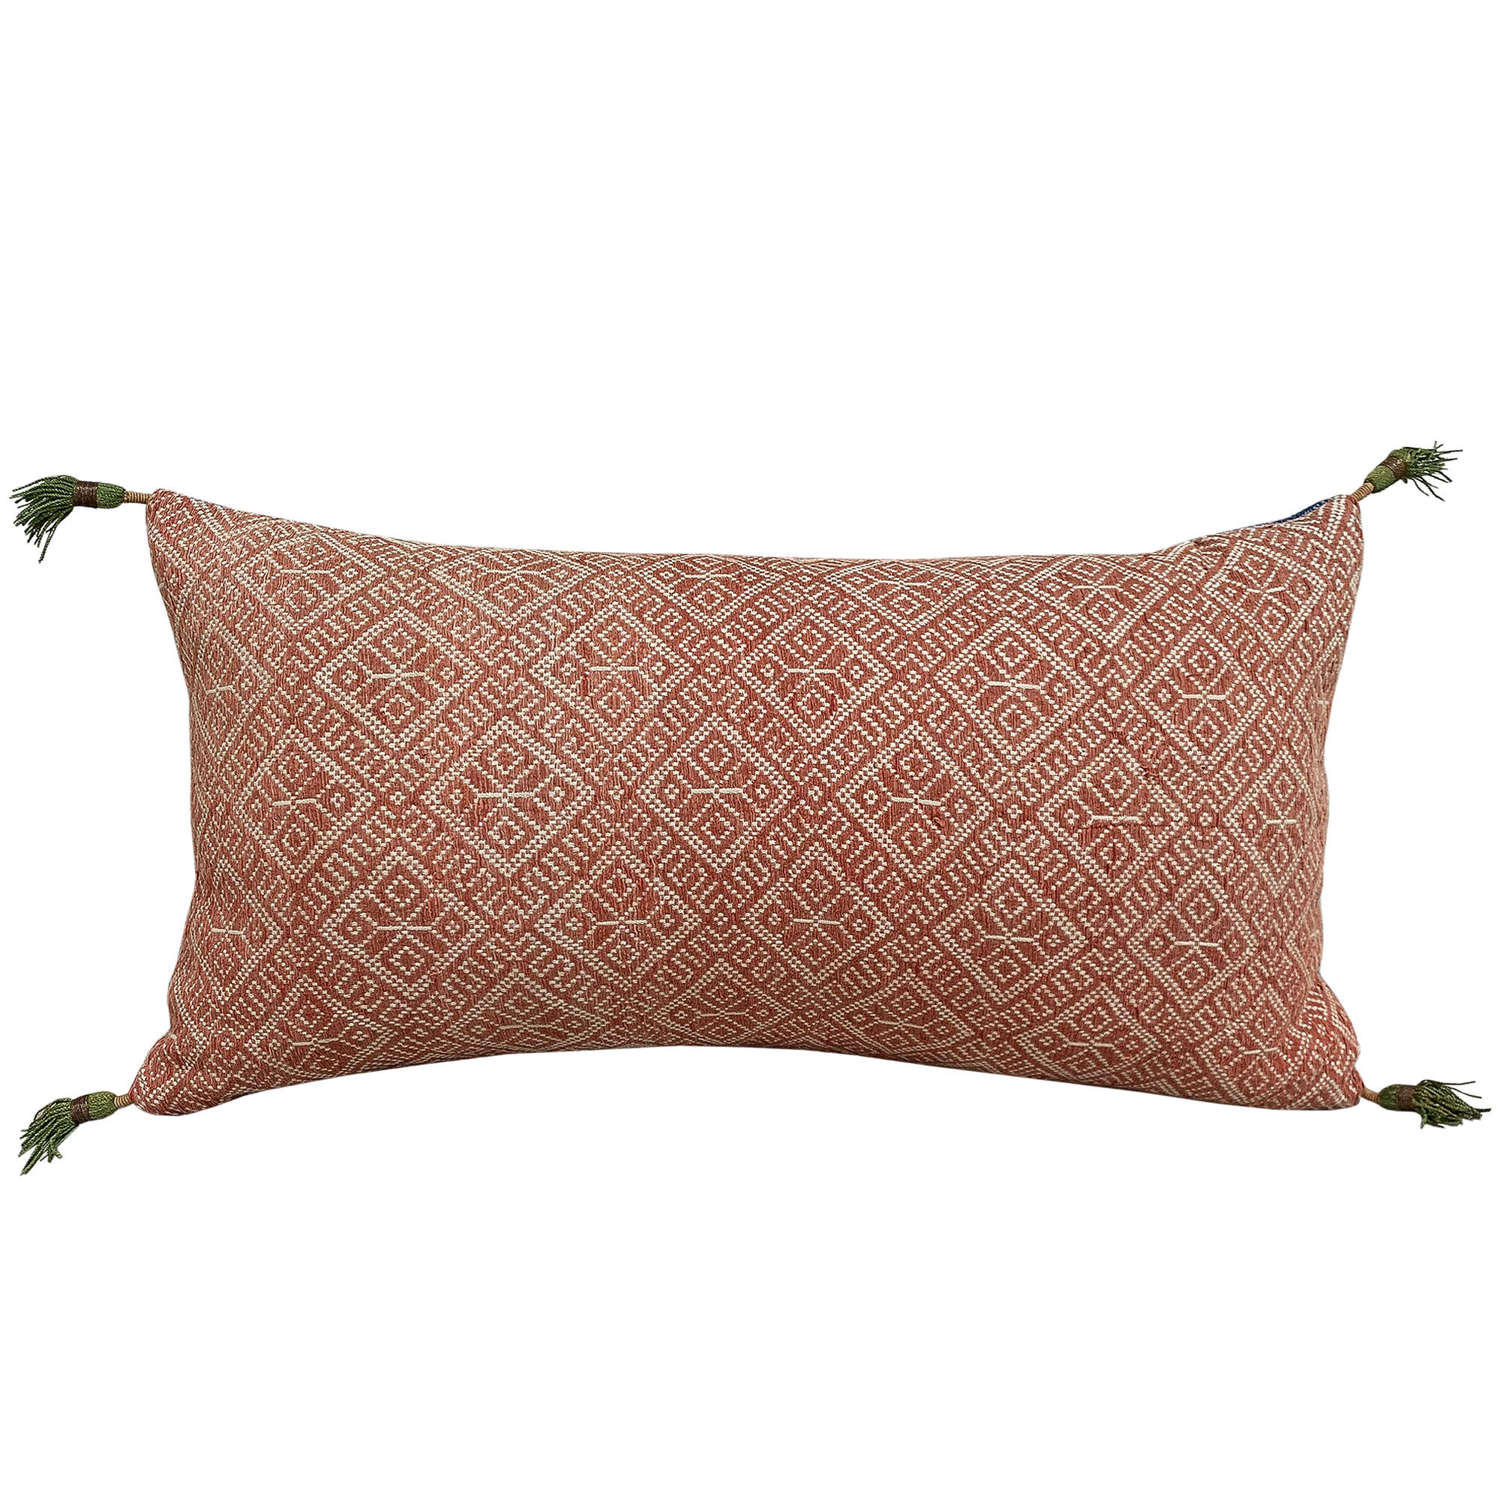 Dai cushions with vintage tasssels